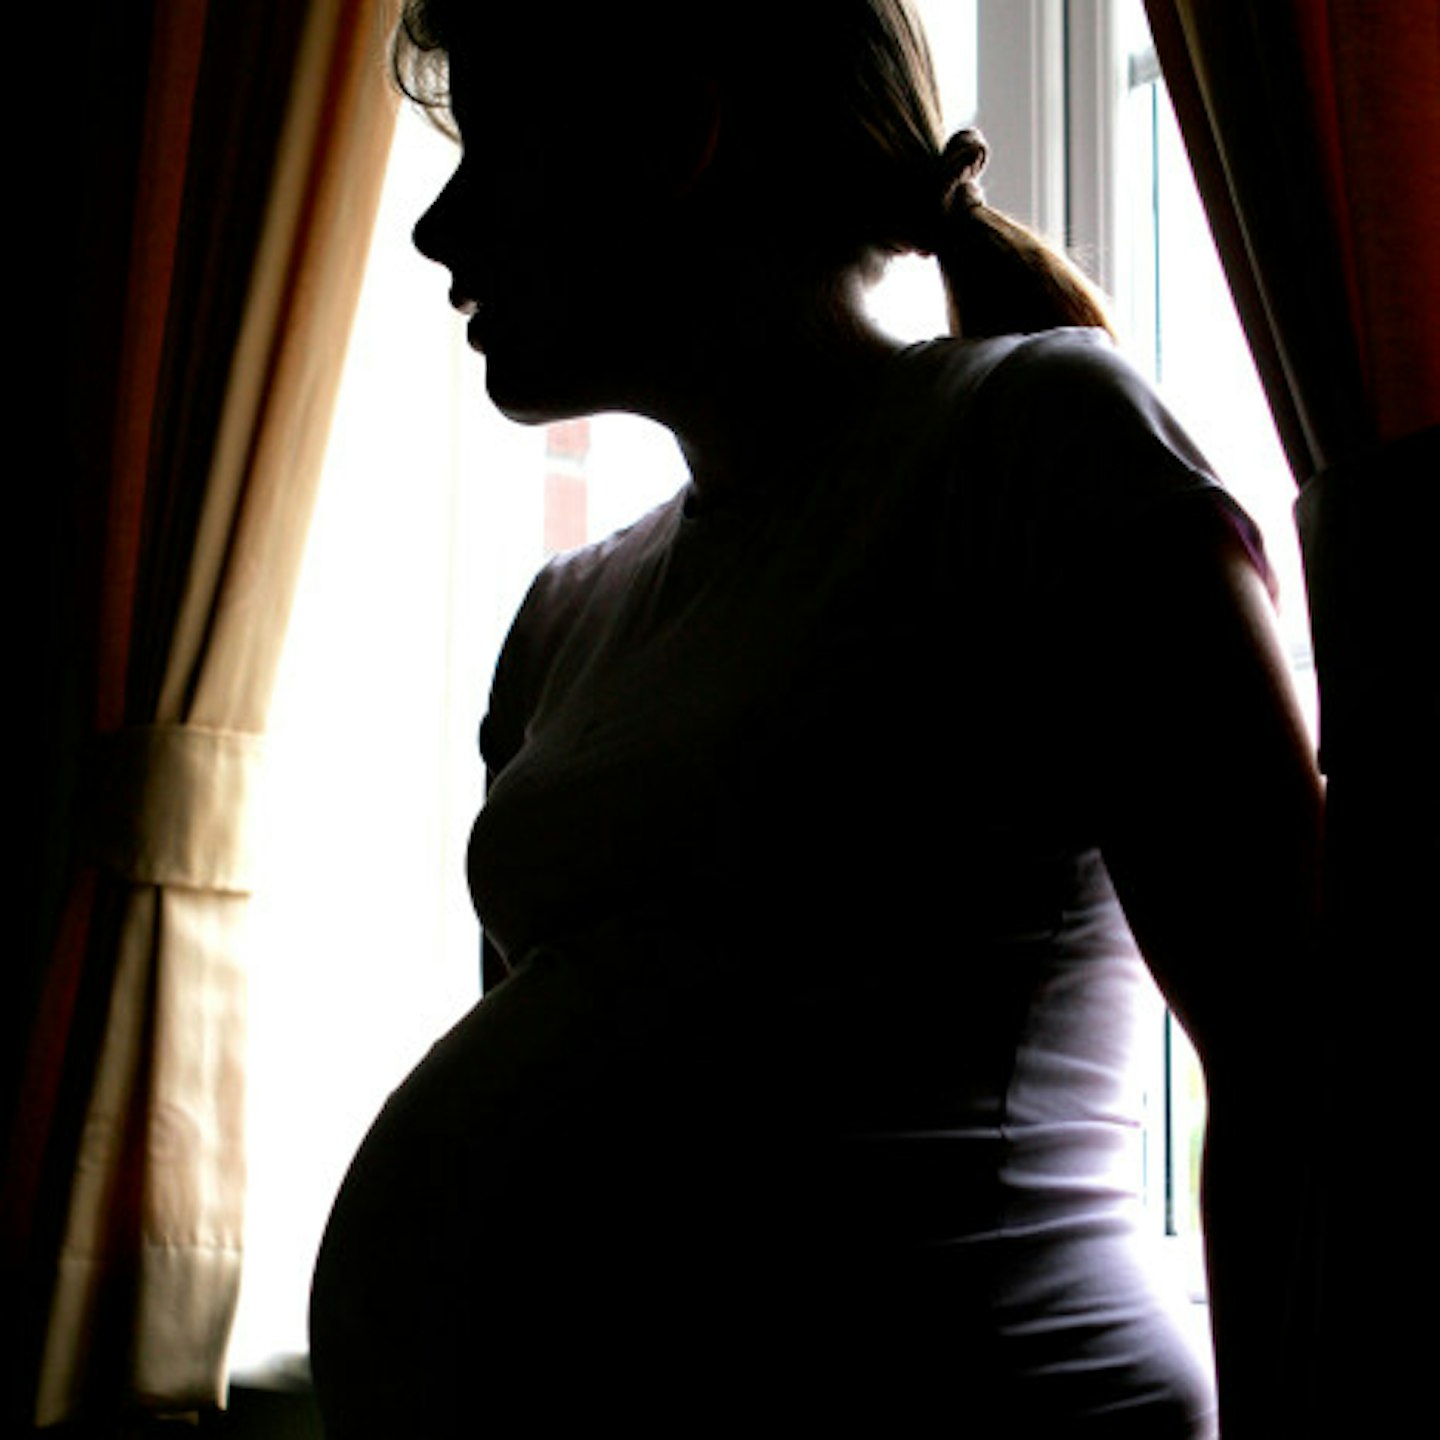 Should we punish pregnant drug addicts - or help them?